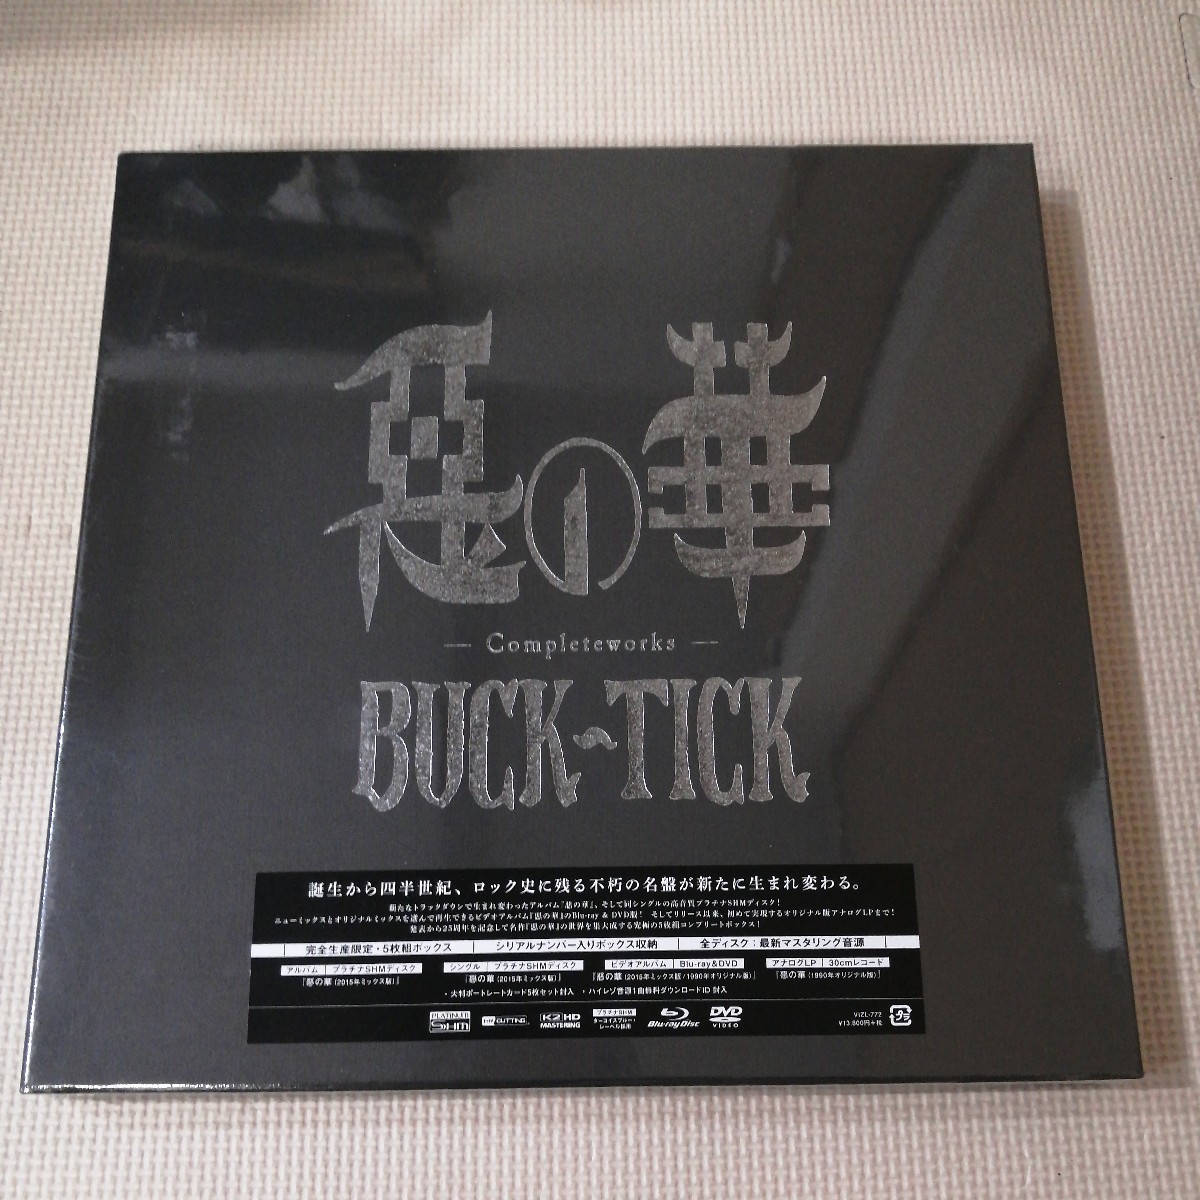  new goods unopened BUCK-TICK 5 sheets set 25 anniversary memorial box [.. .-Completeworks -] complete production limitation album Sakurai .. inspection ) unusual empty bad. .